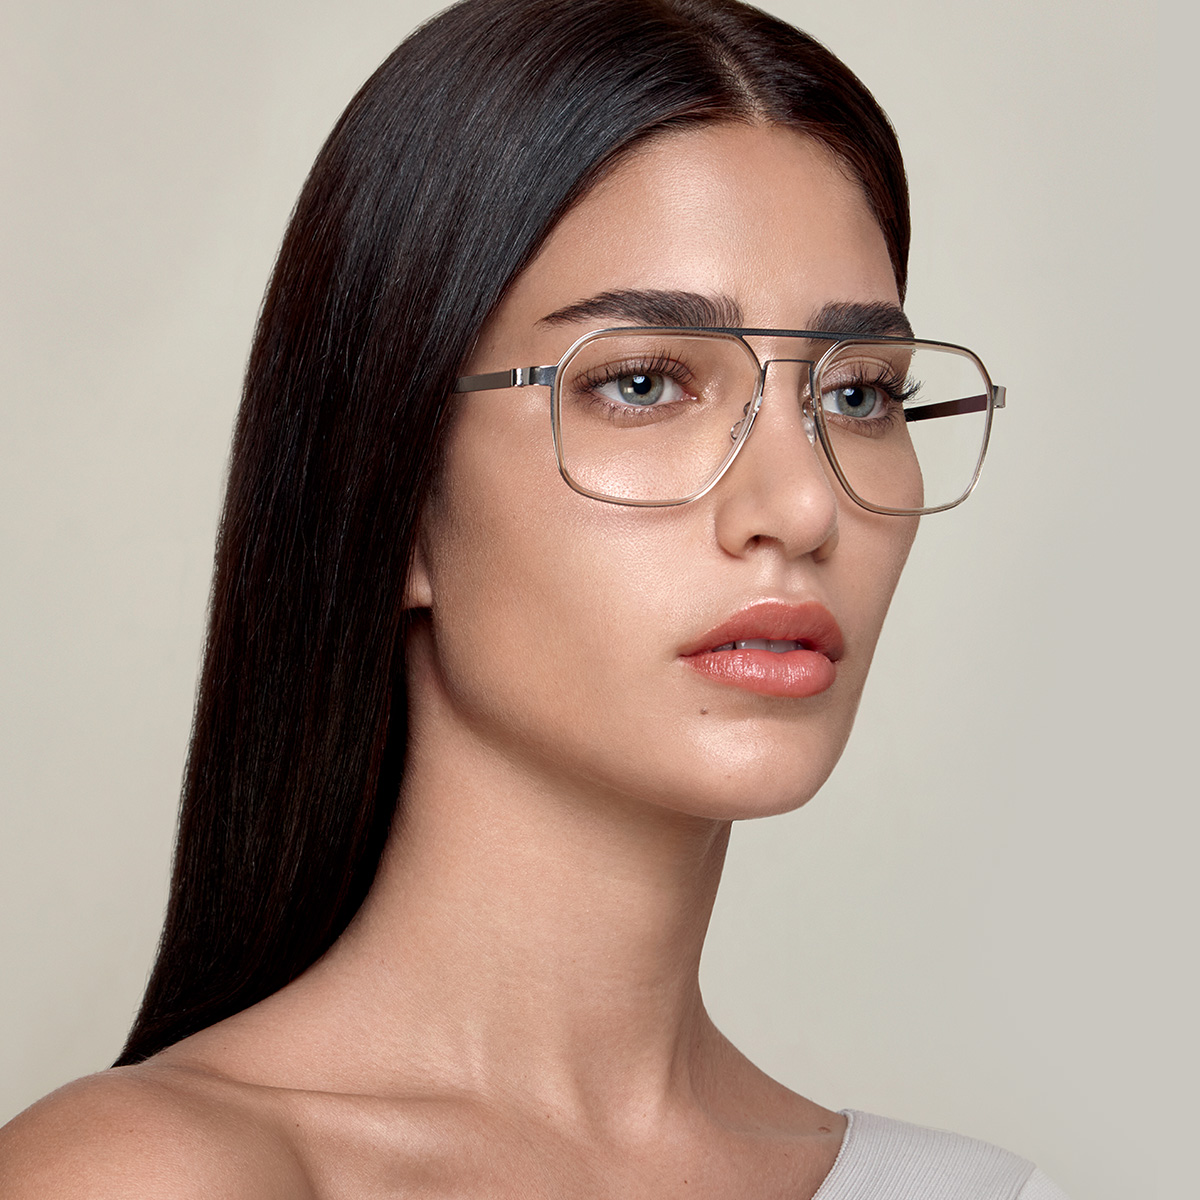 LINDBERG women’s strip titanium glasses Model 9753 rounded square shape double bar bridge glasses